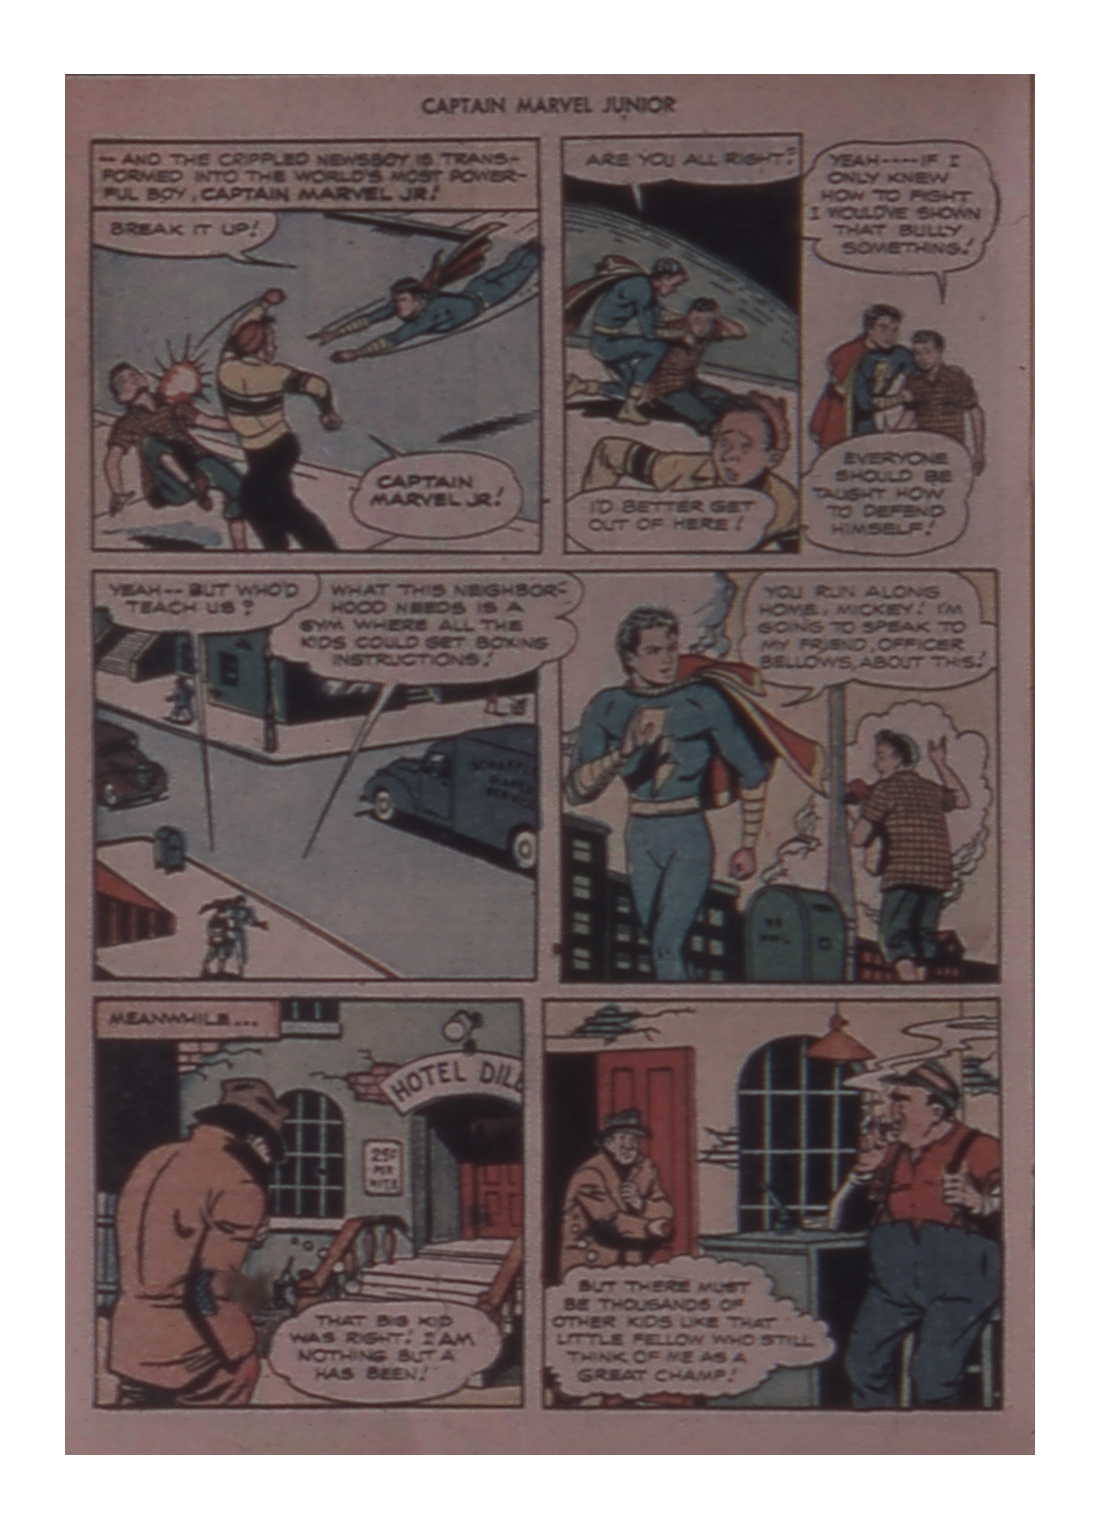 Read online Captain Marvel, Jr. comic -  Issue #57 - 28